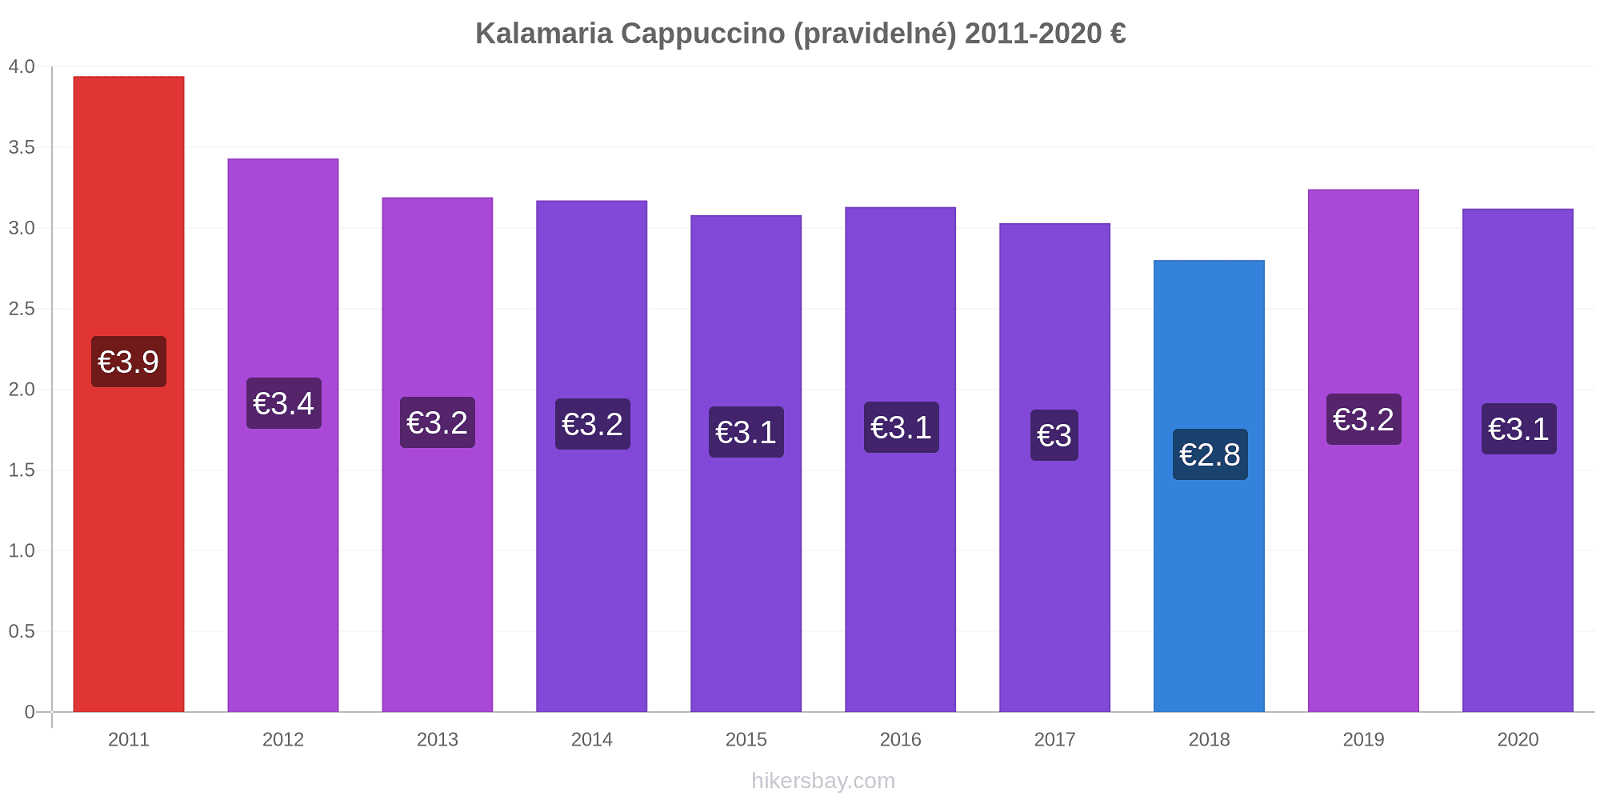 Kalamaria změny cen Cappuccino (pravidelné) hikersbay.com